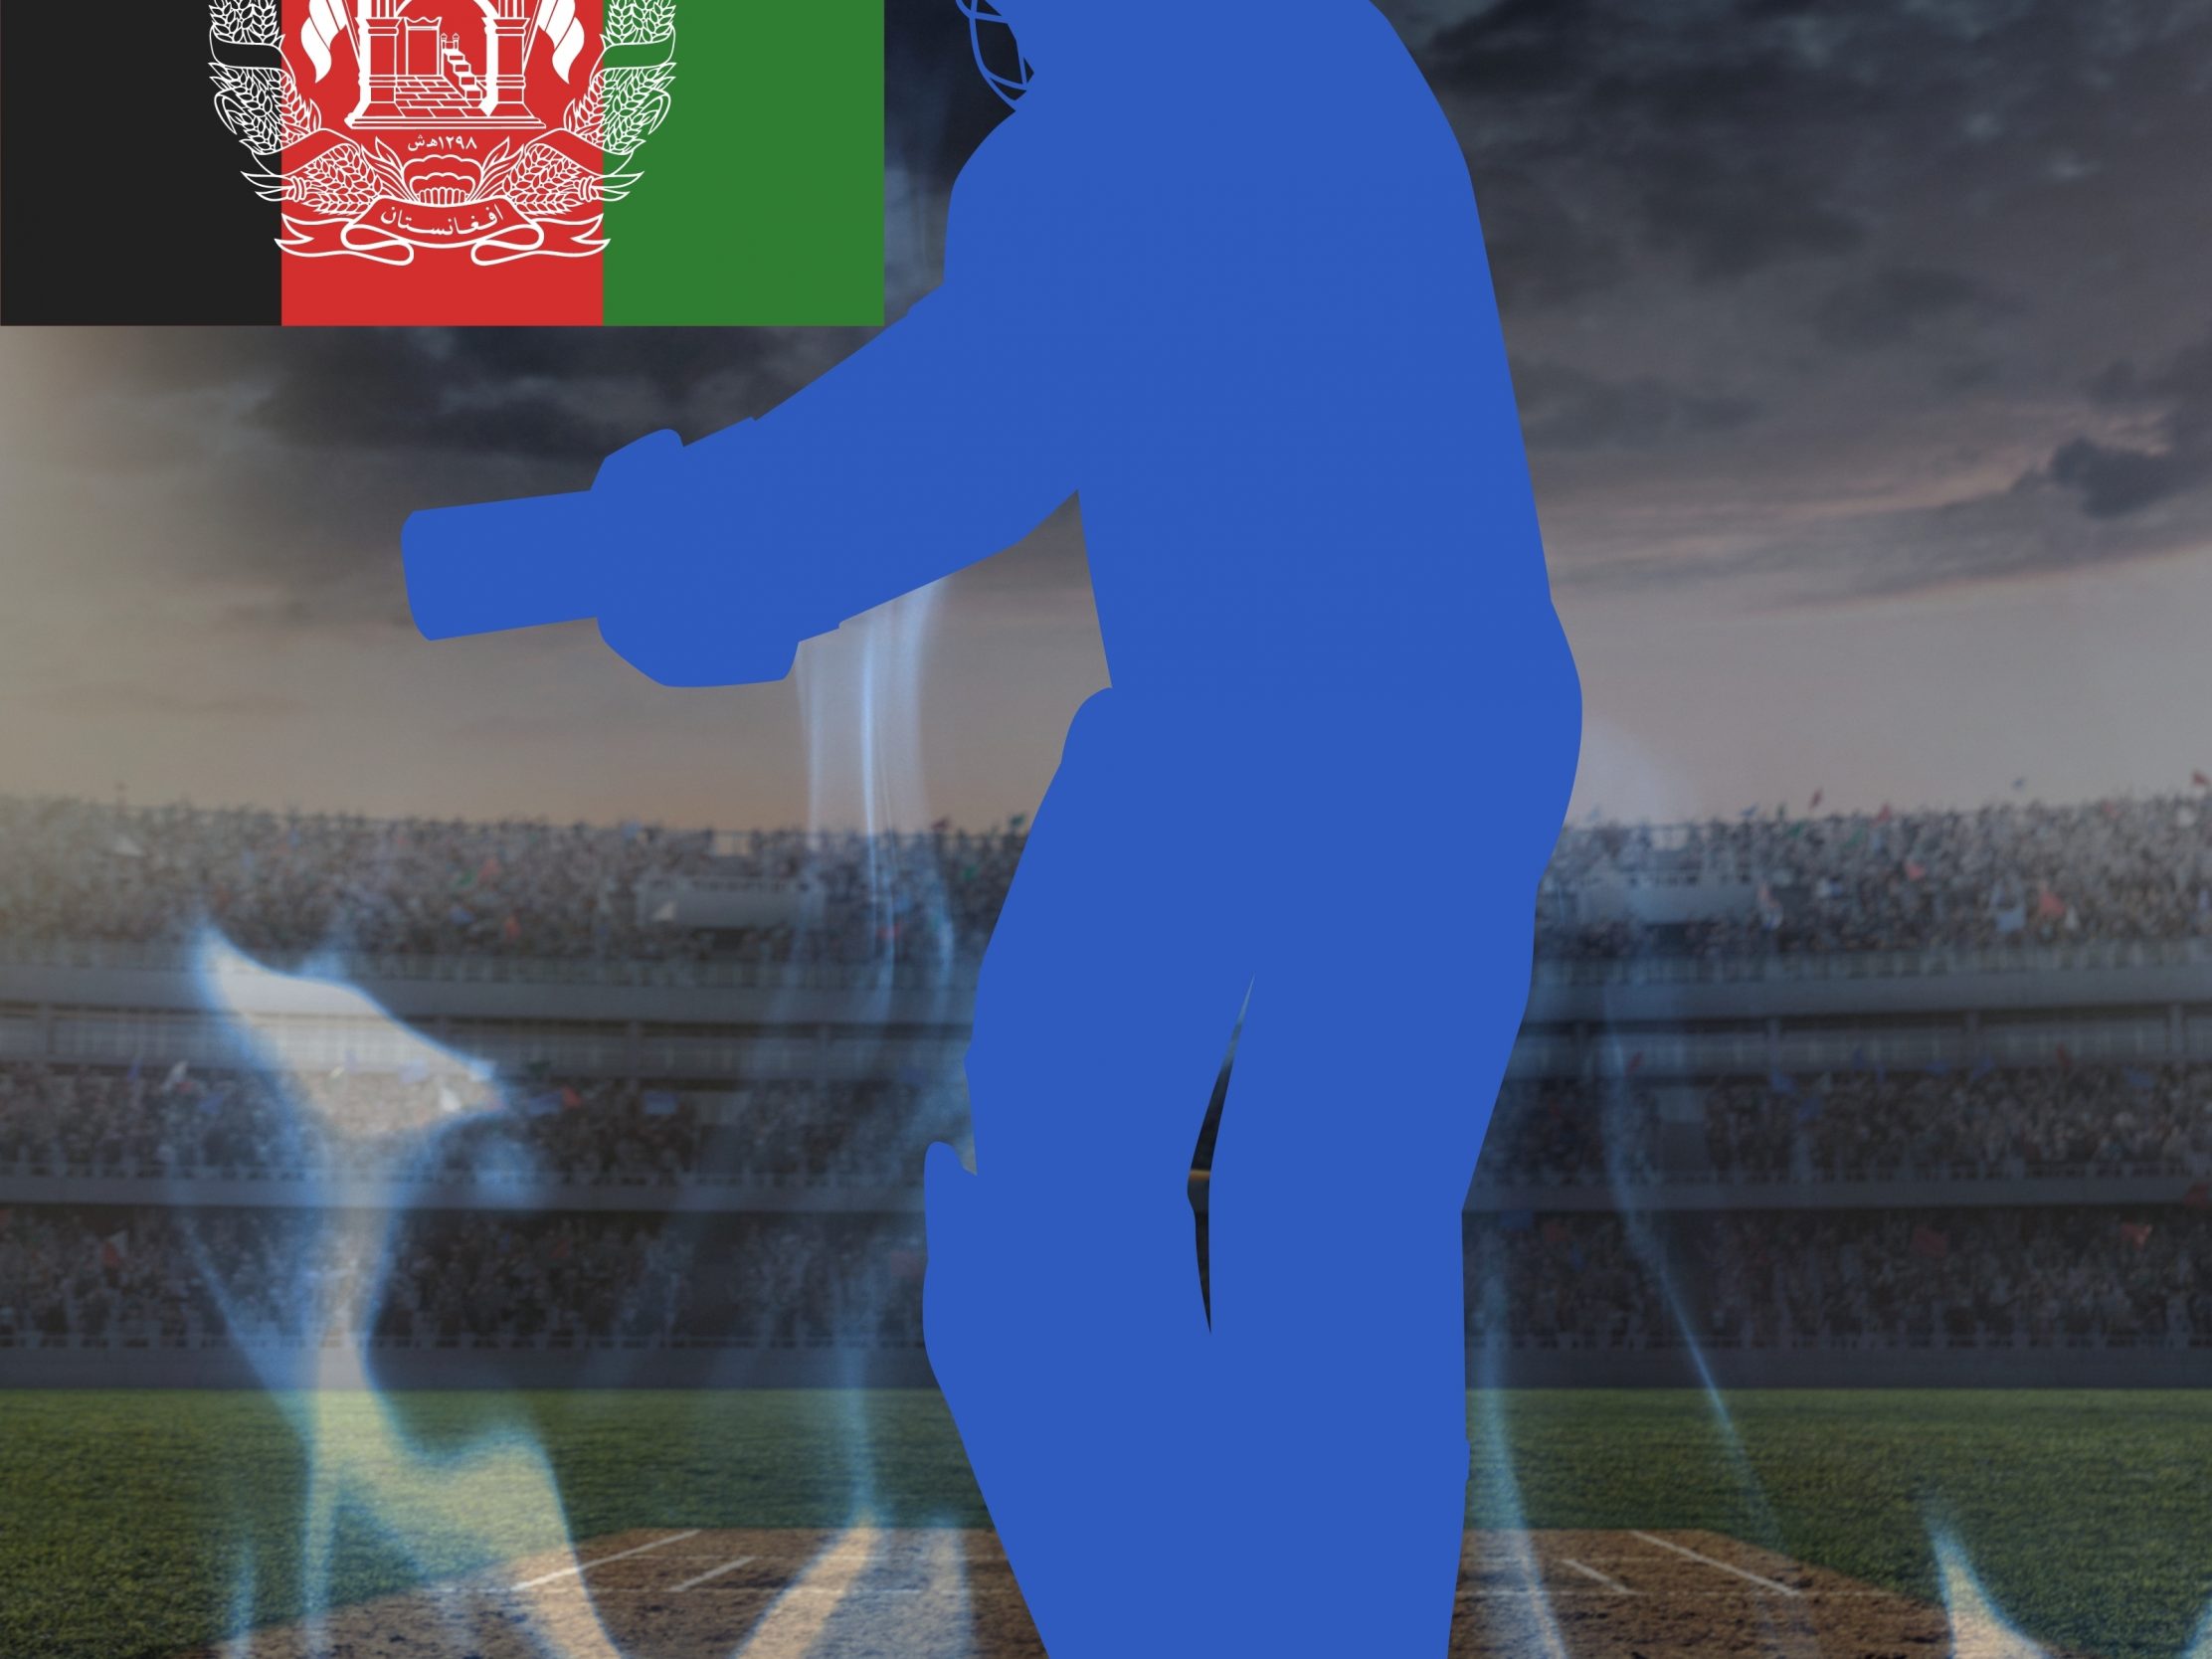 2224x1668 iPad Pro wallpapers Afhganistan Cricket Stadium iPad Wallpaper 2224x1668 pixels resolution